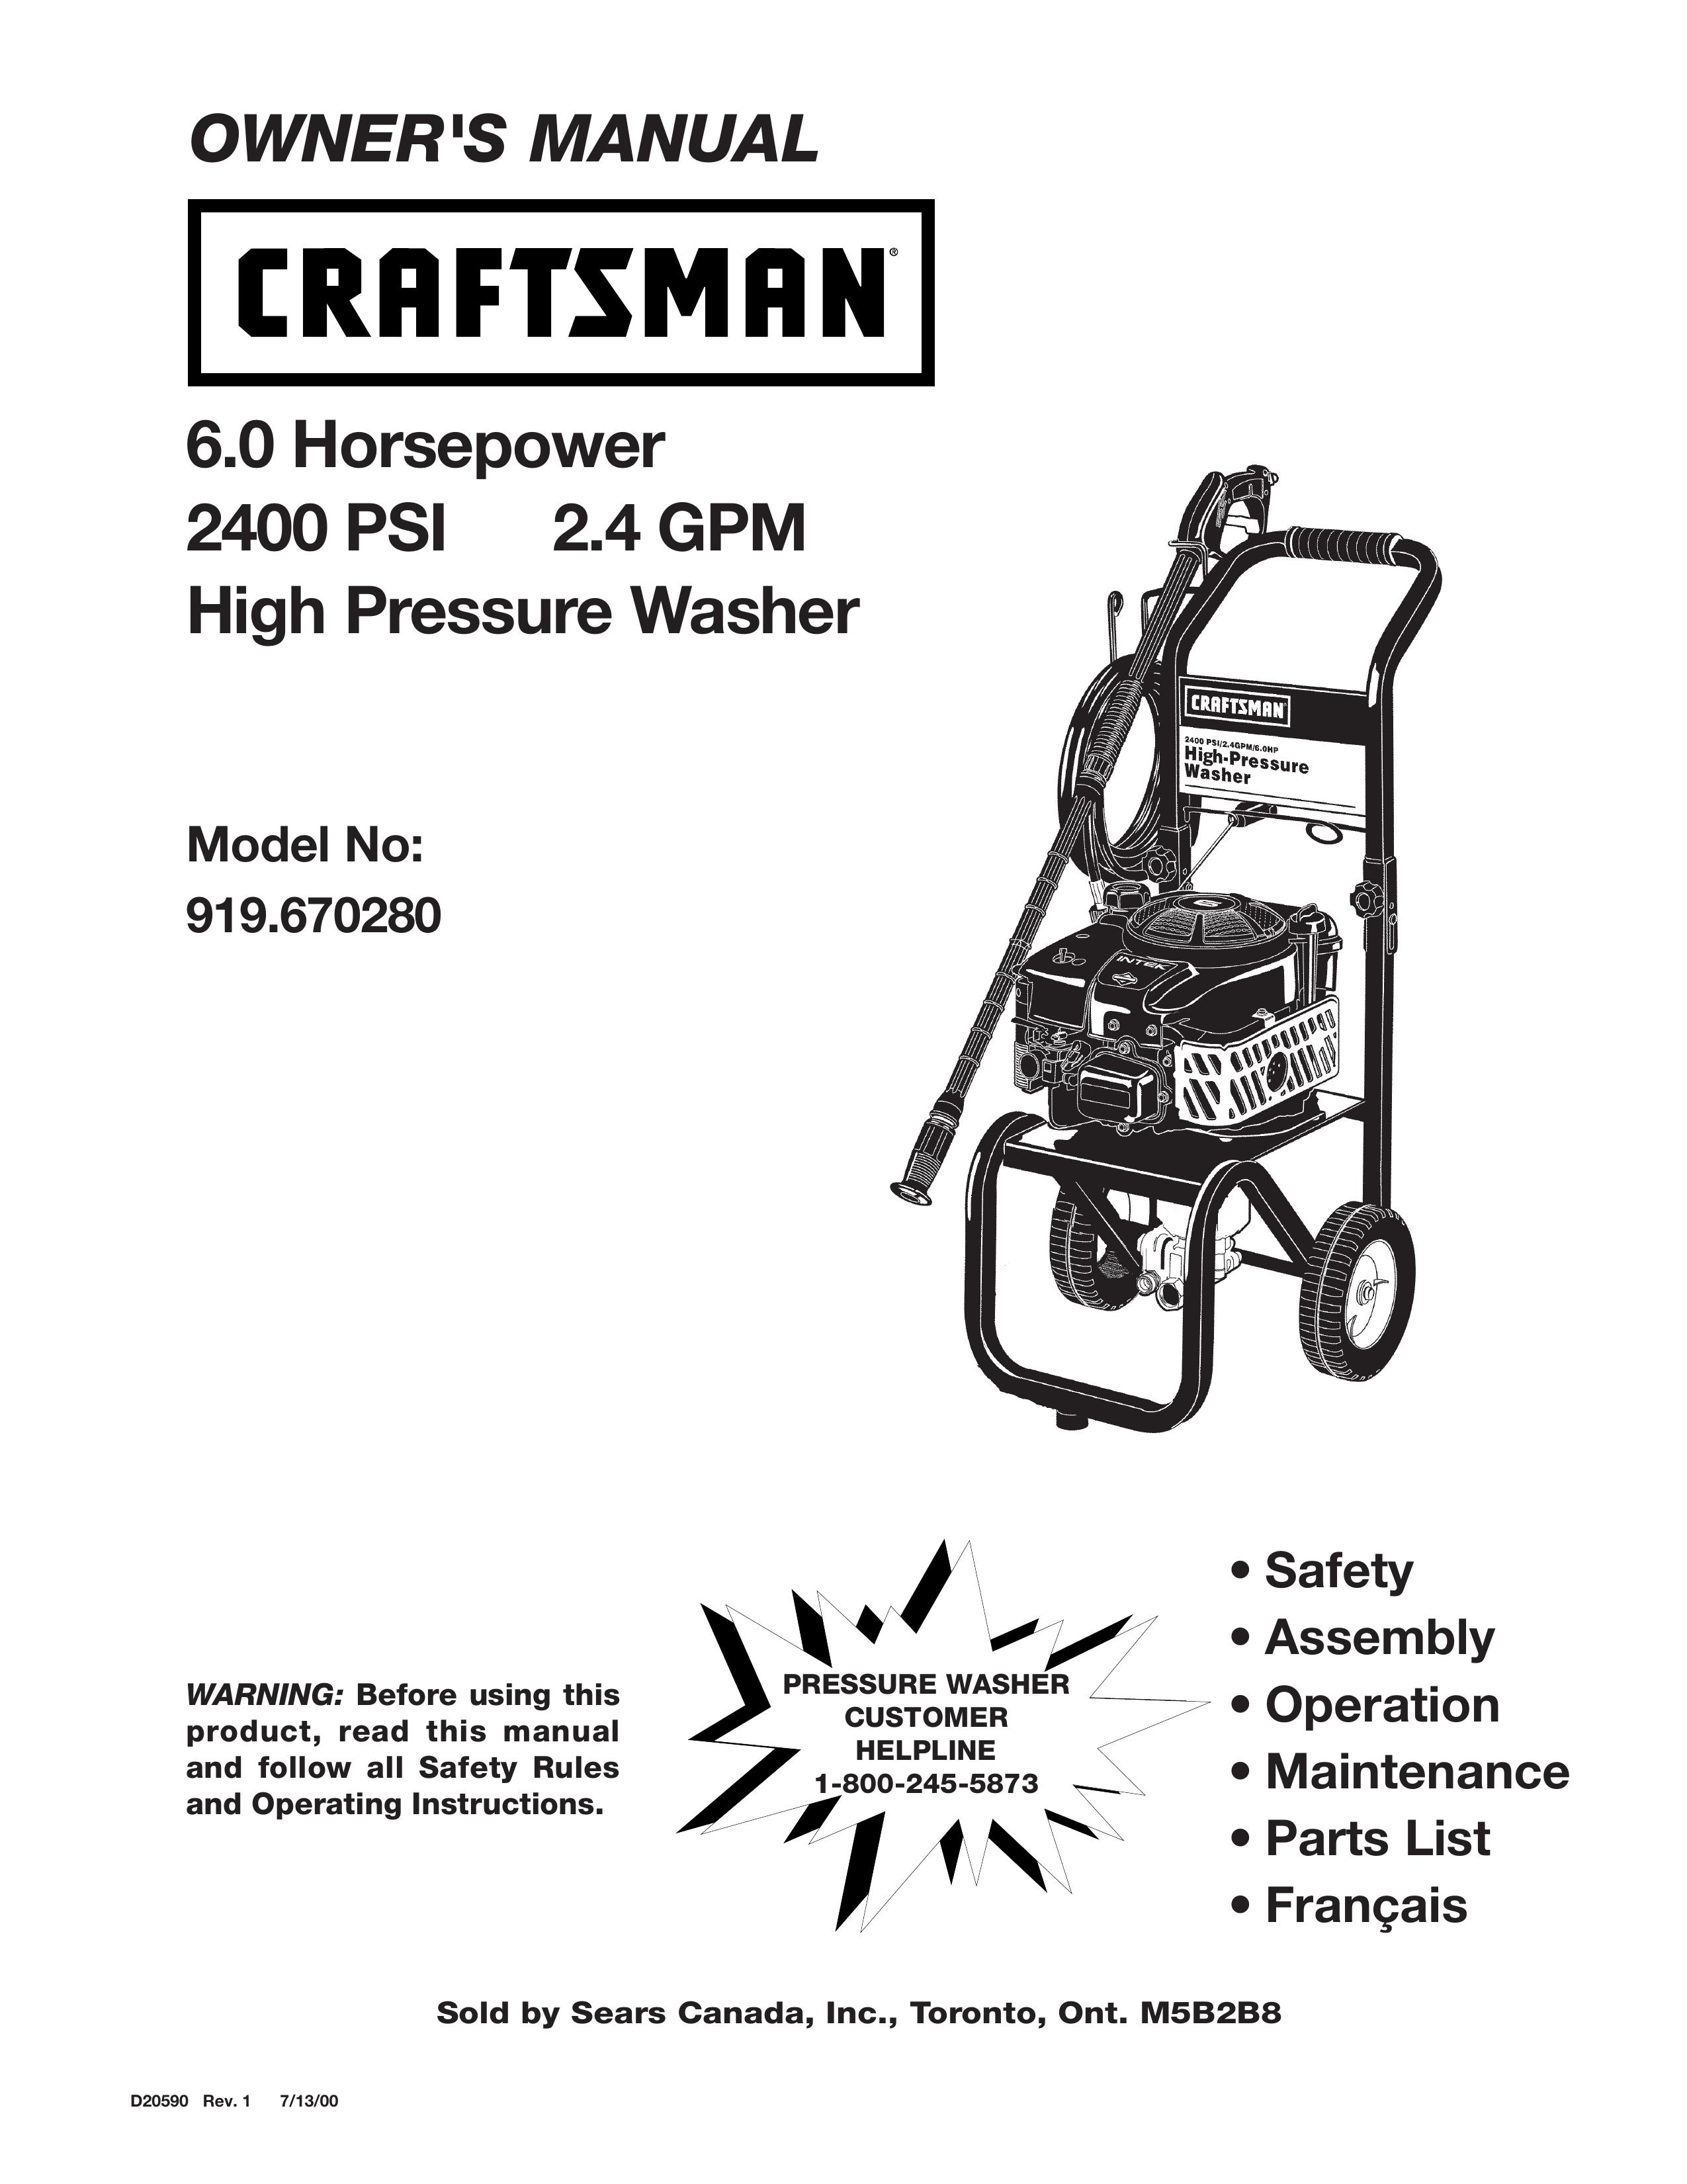 Craftsman 919.670280 Pressure Washer User Manual